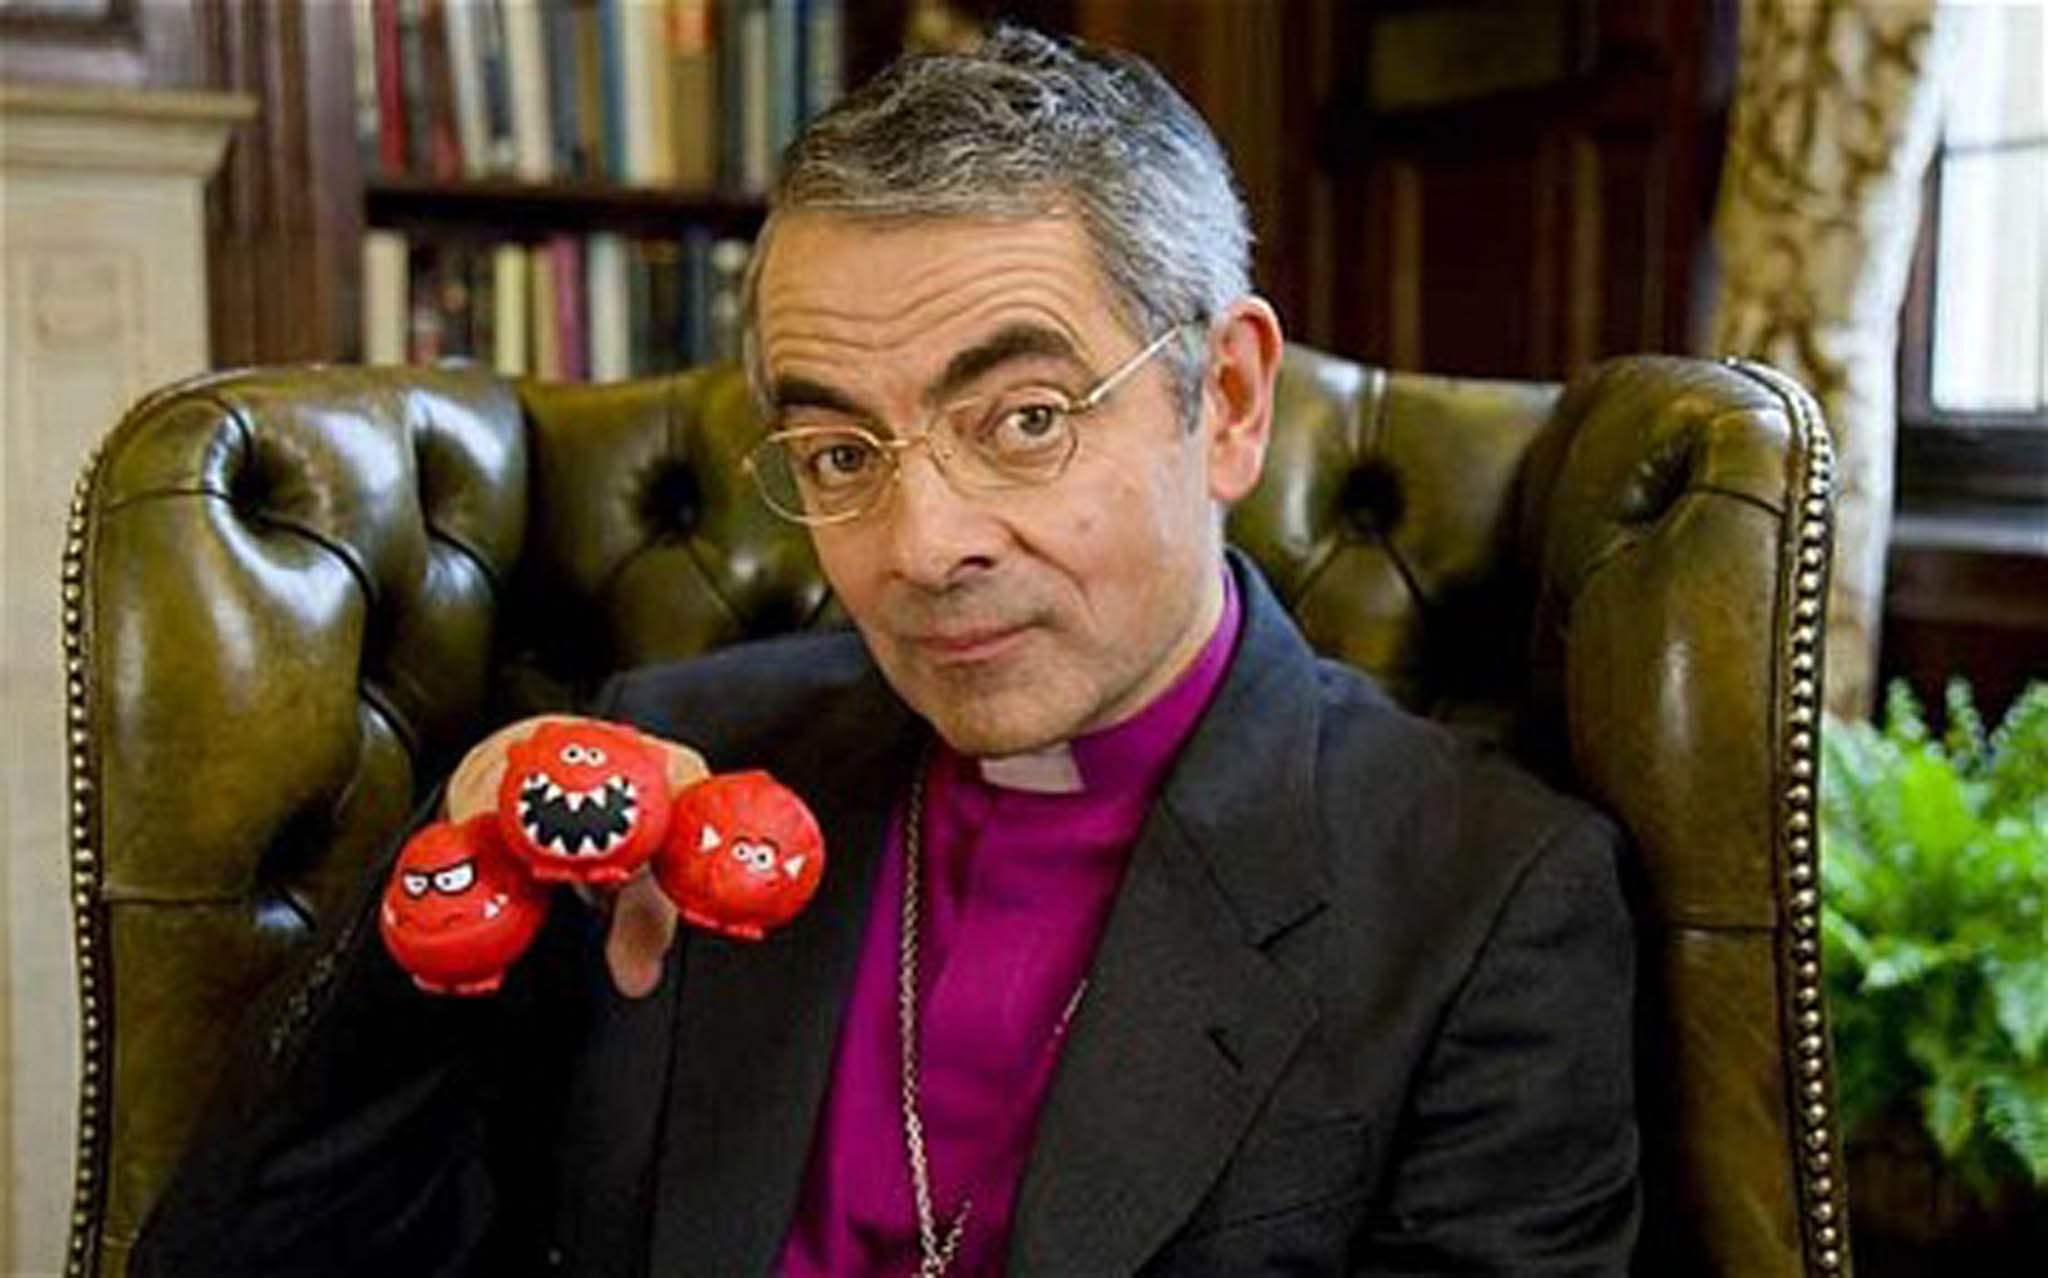 Rowan Atkinson in his Comic Relief sketch as the Archbishop of Canterbury